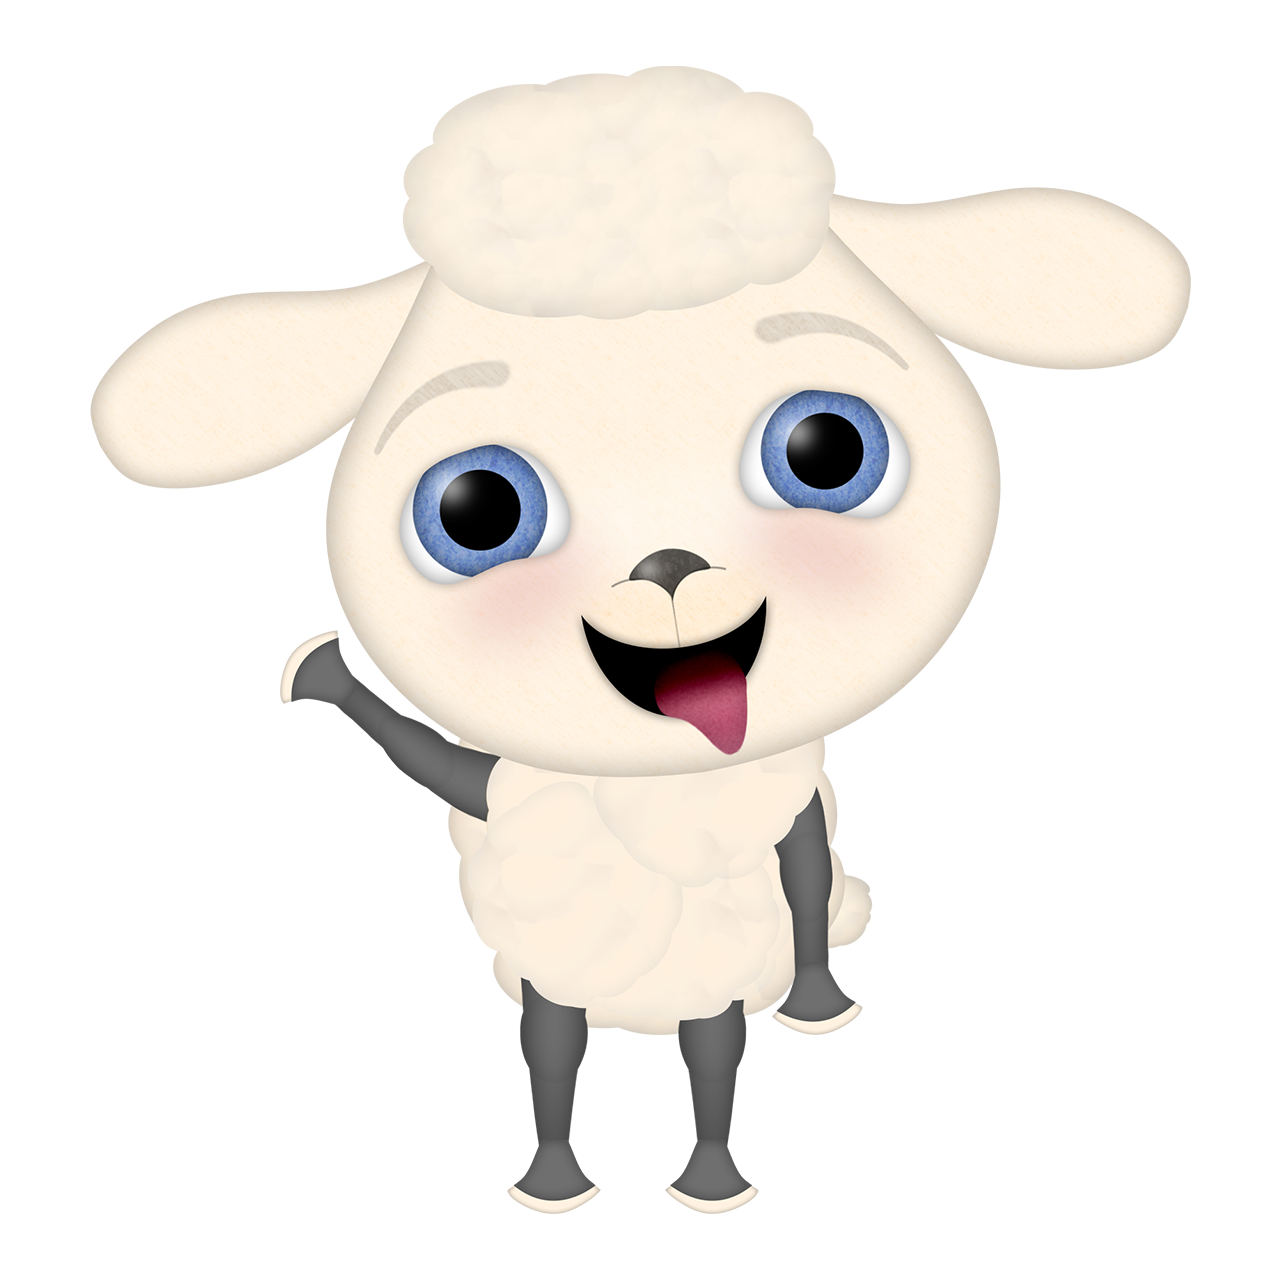 Sheep Mascot